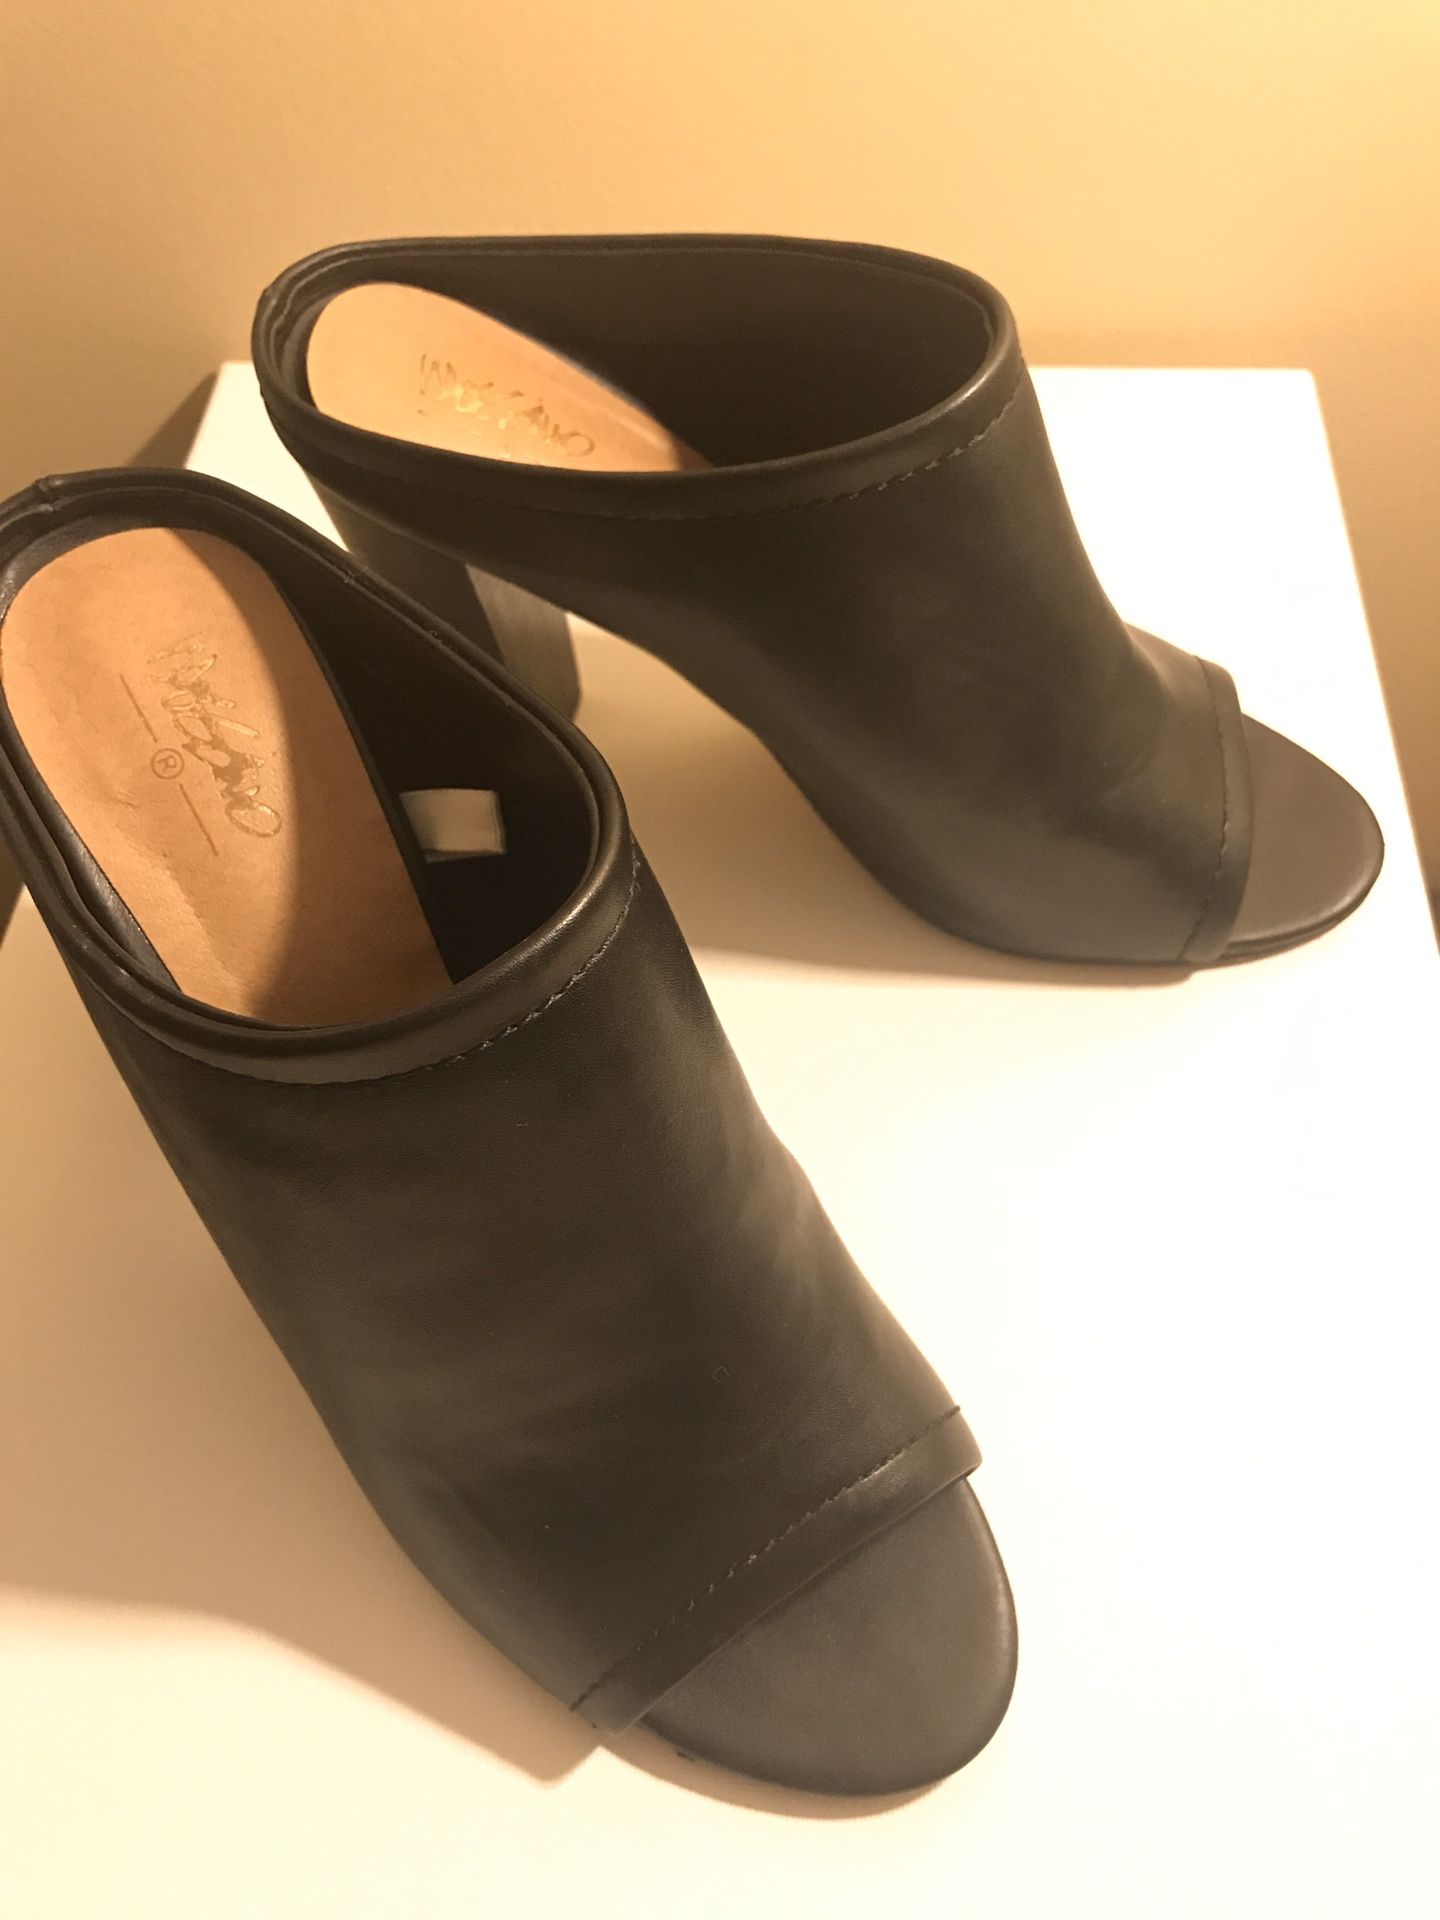 Women’s heels size 8 1/2